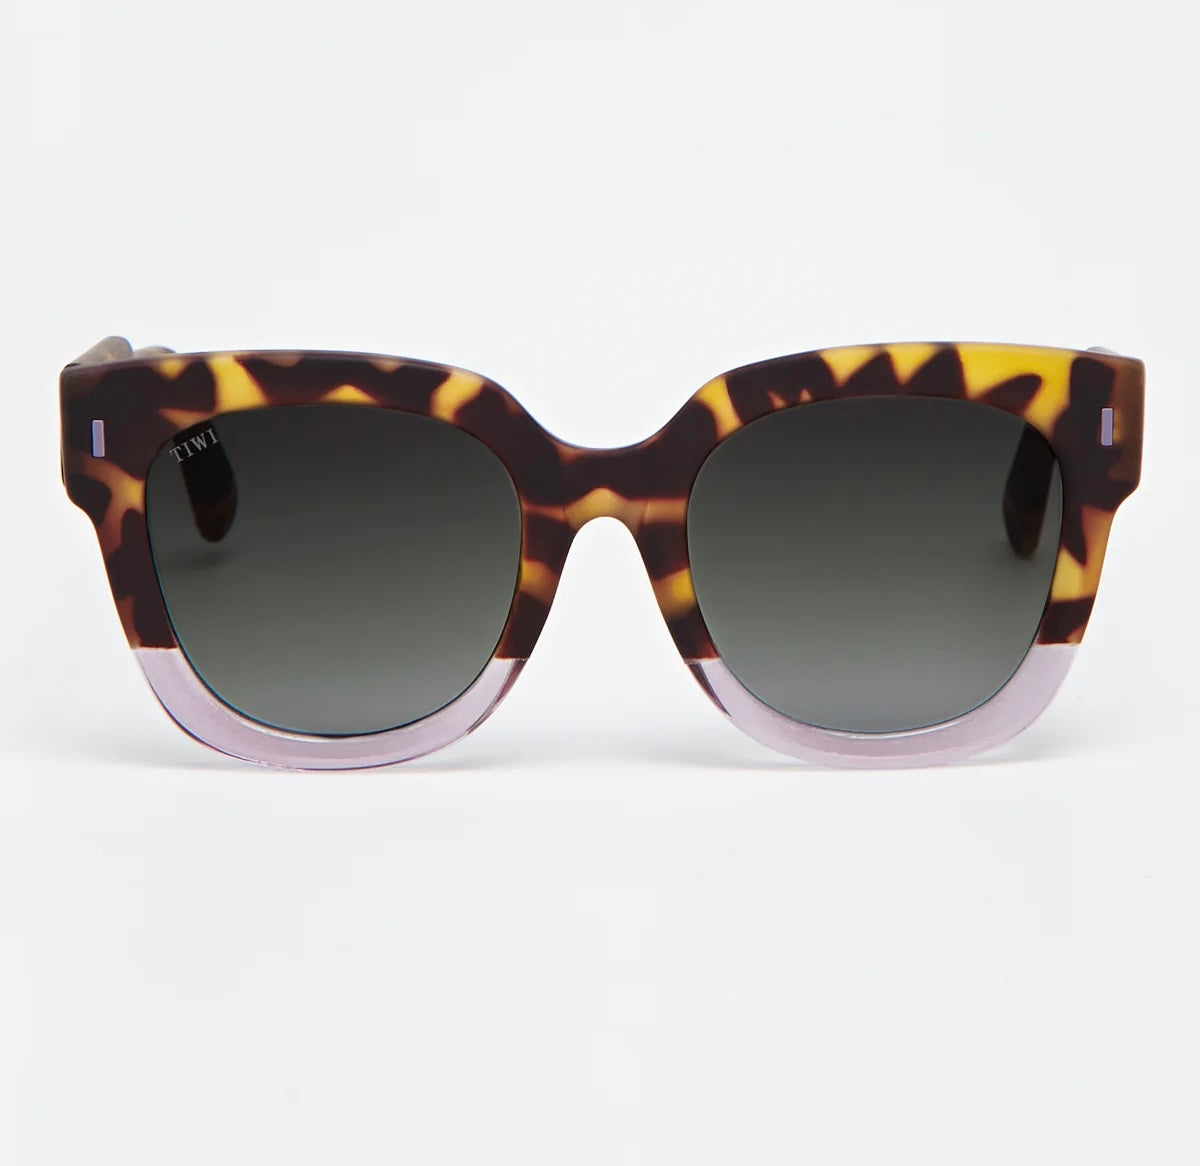 KERR Sunglasses Available in more colors Rubber Bicolor Green Tortoise/Shiny Lavander  